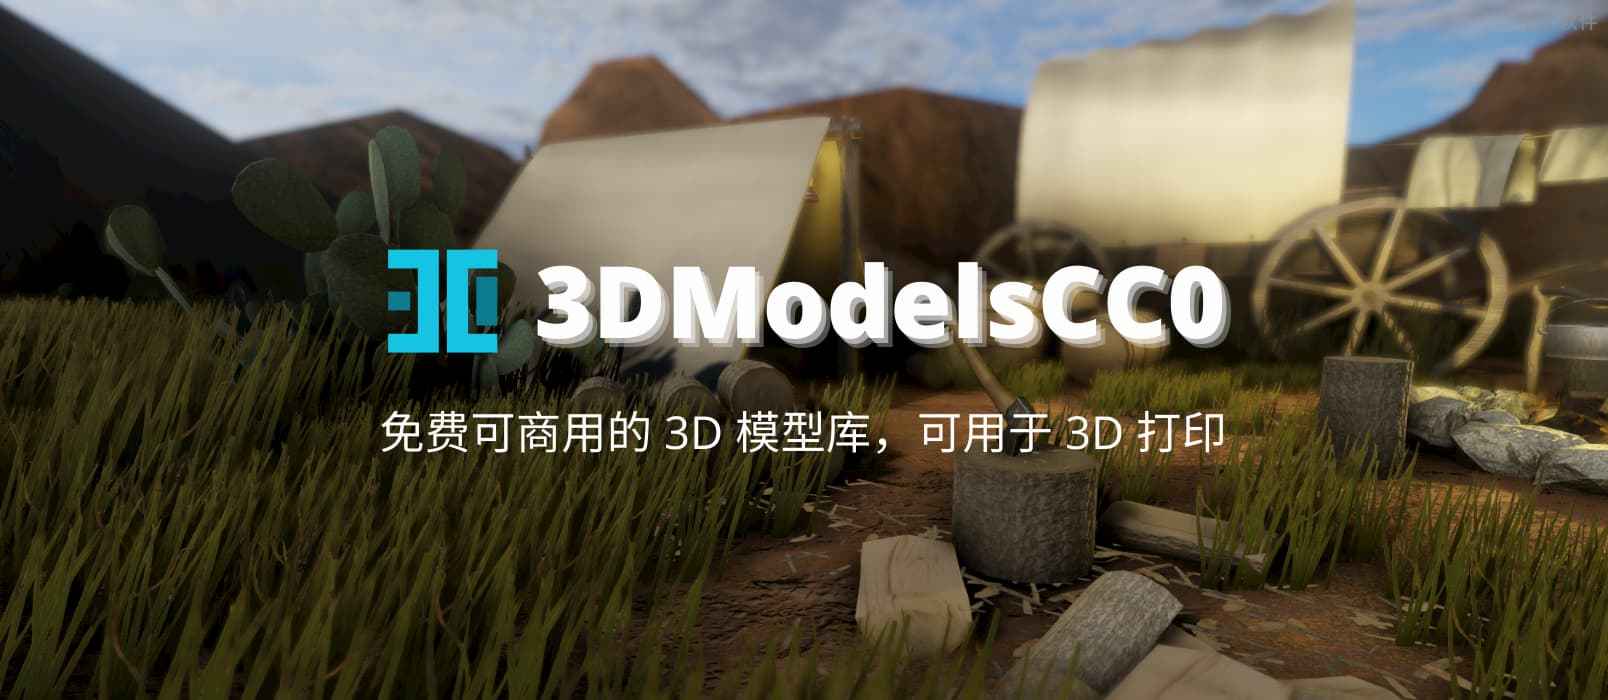 3DModelsCC0 – 免费可商用的 3D 模型库，可用于 3D 打印(图1)